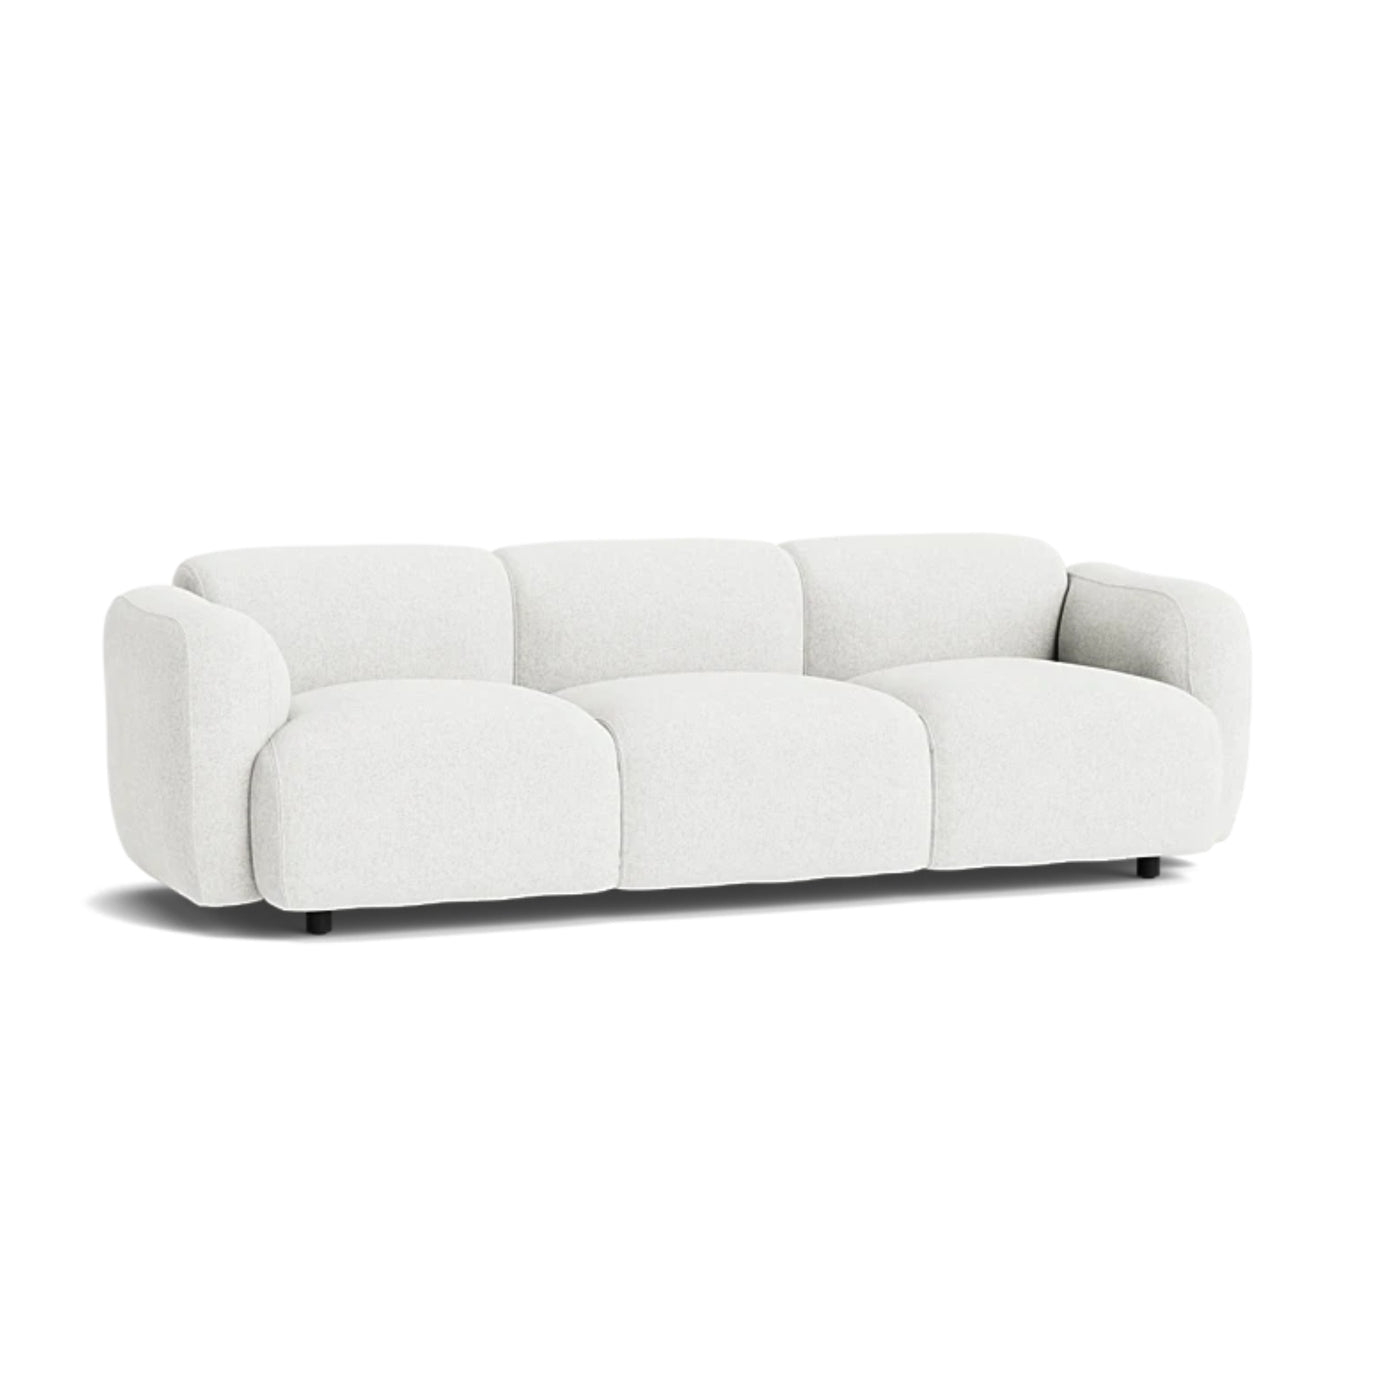 Normann Copenhagen Swell 3 Seater Sofa at someday designs. #colour_hallingdal-110